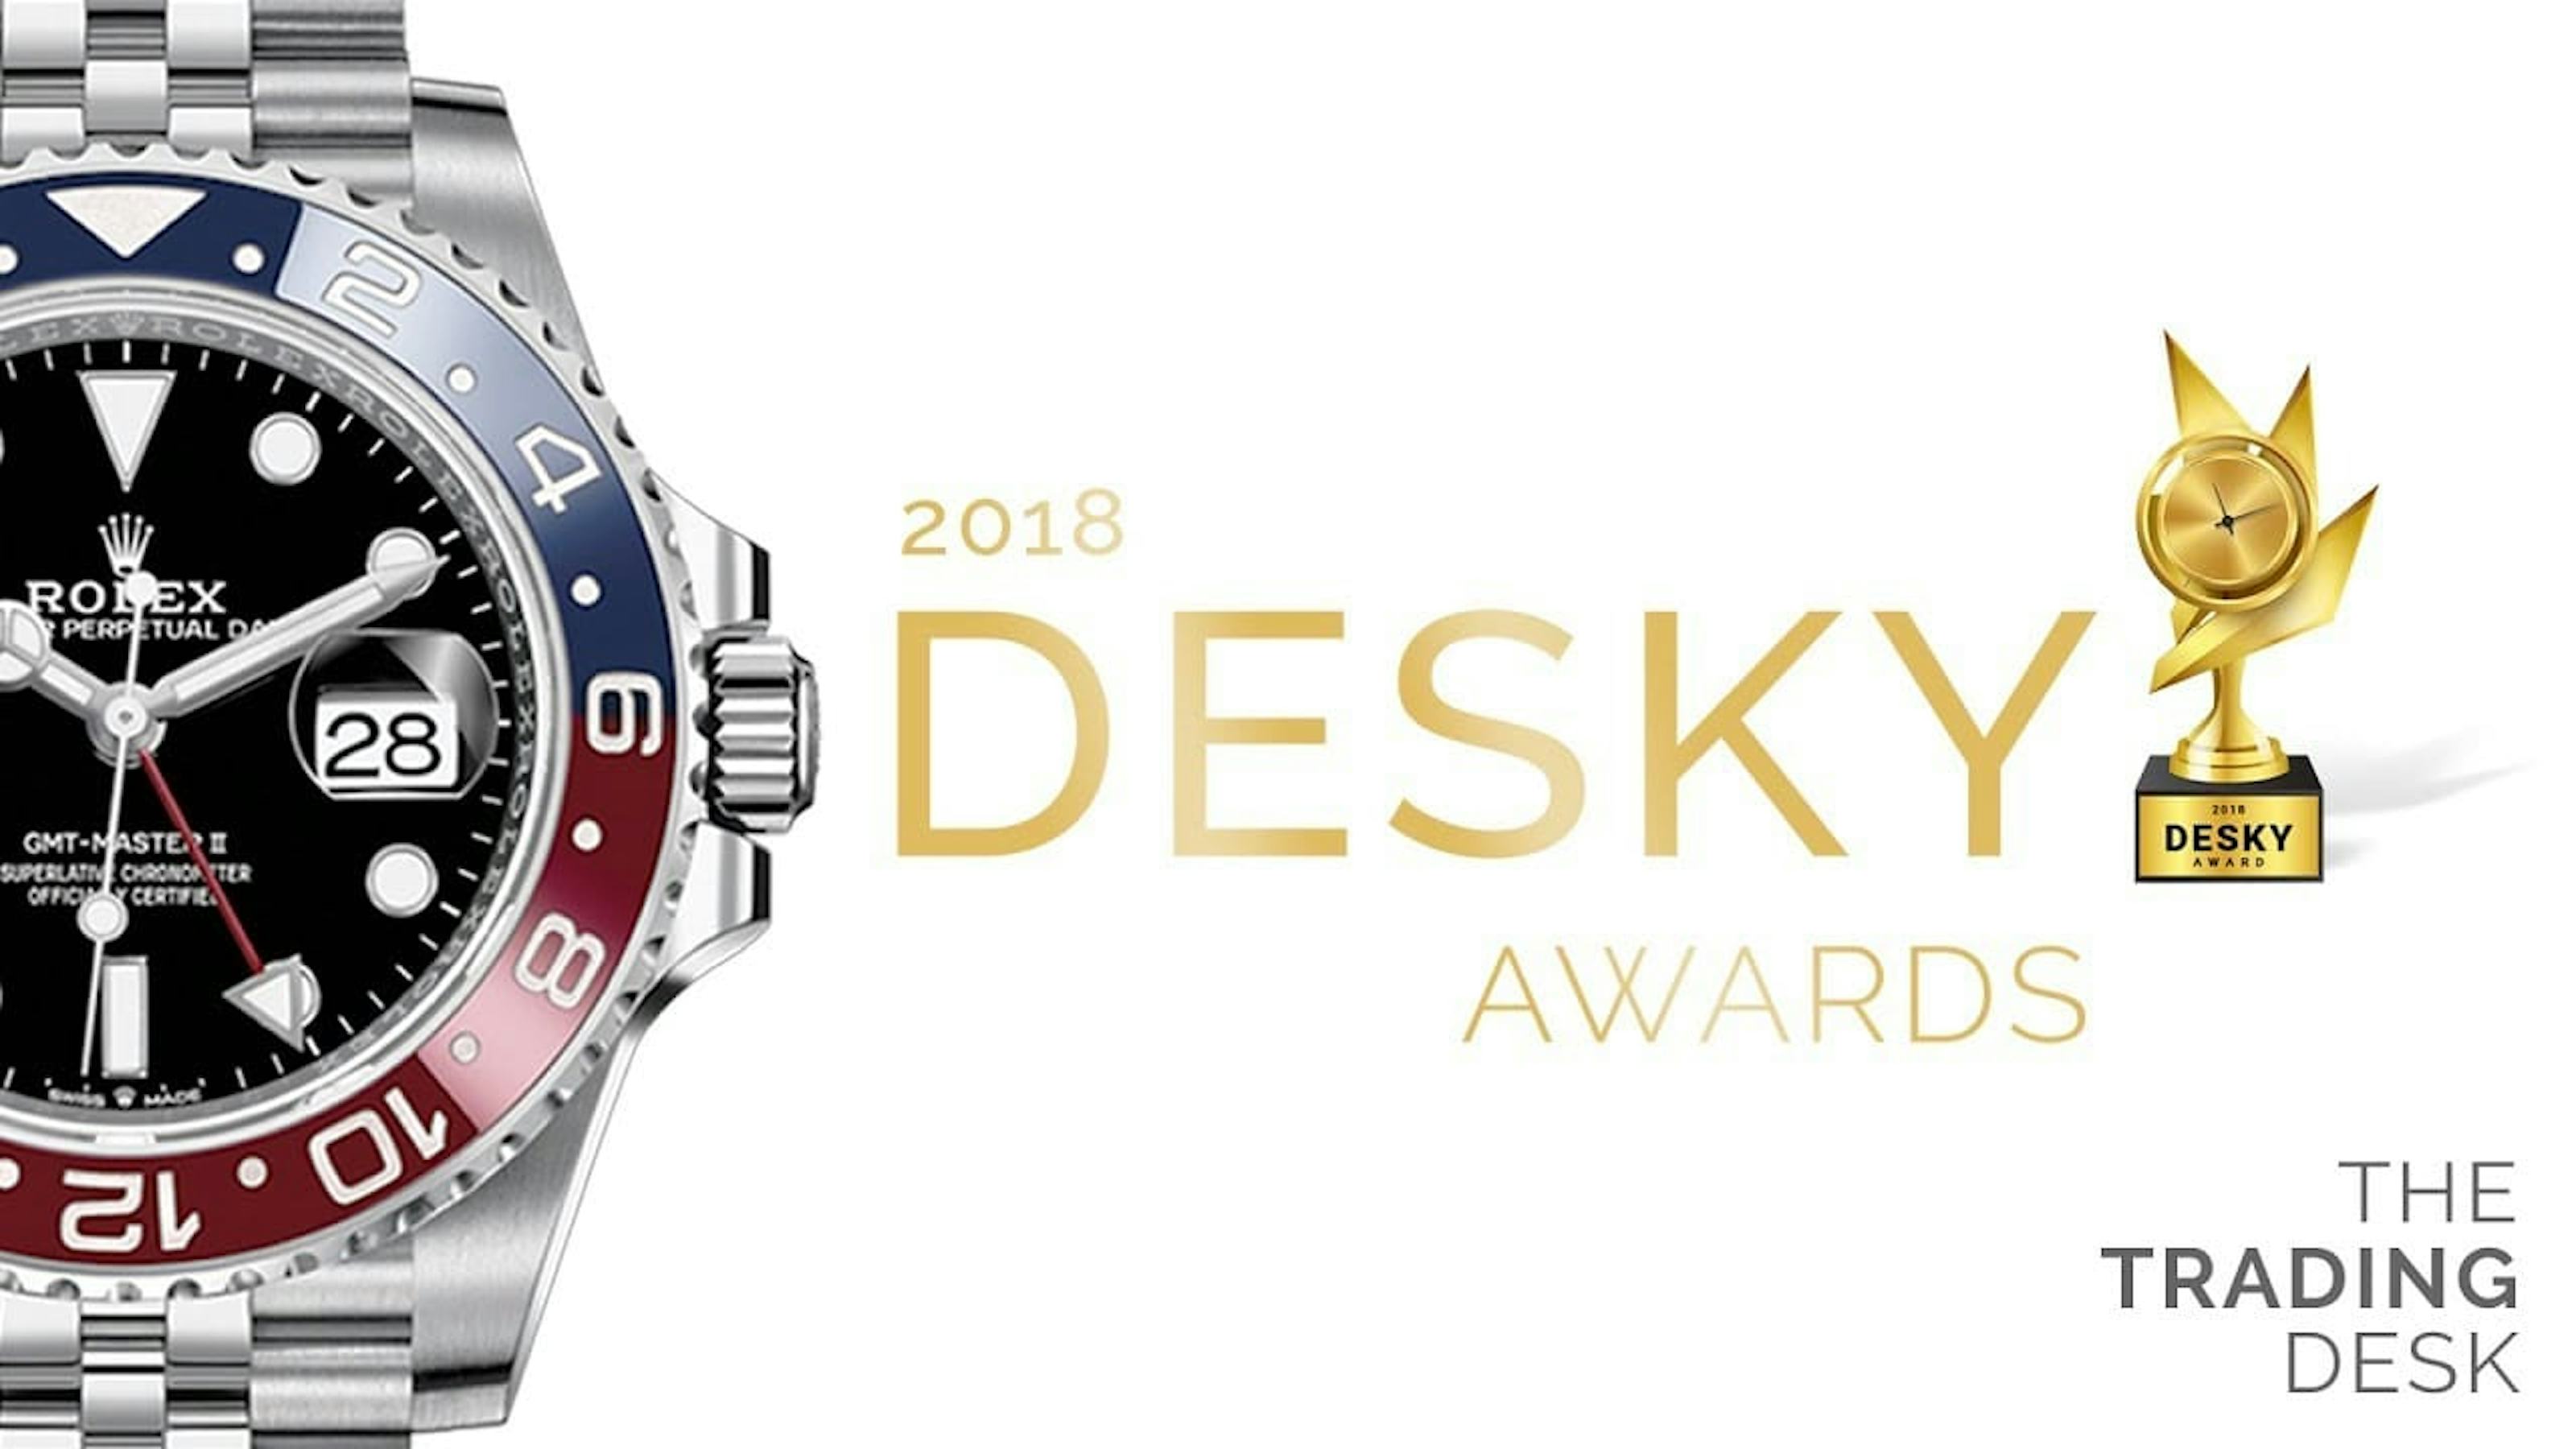 The Desky Awards: The Trading Desk Wraps Up Their 2018 Picks